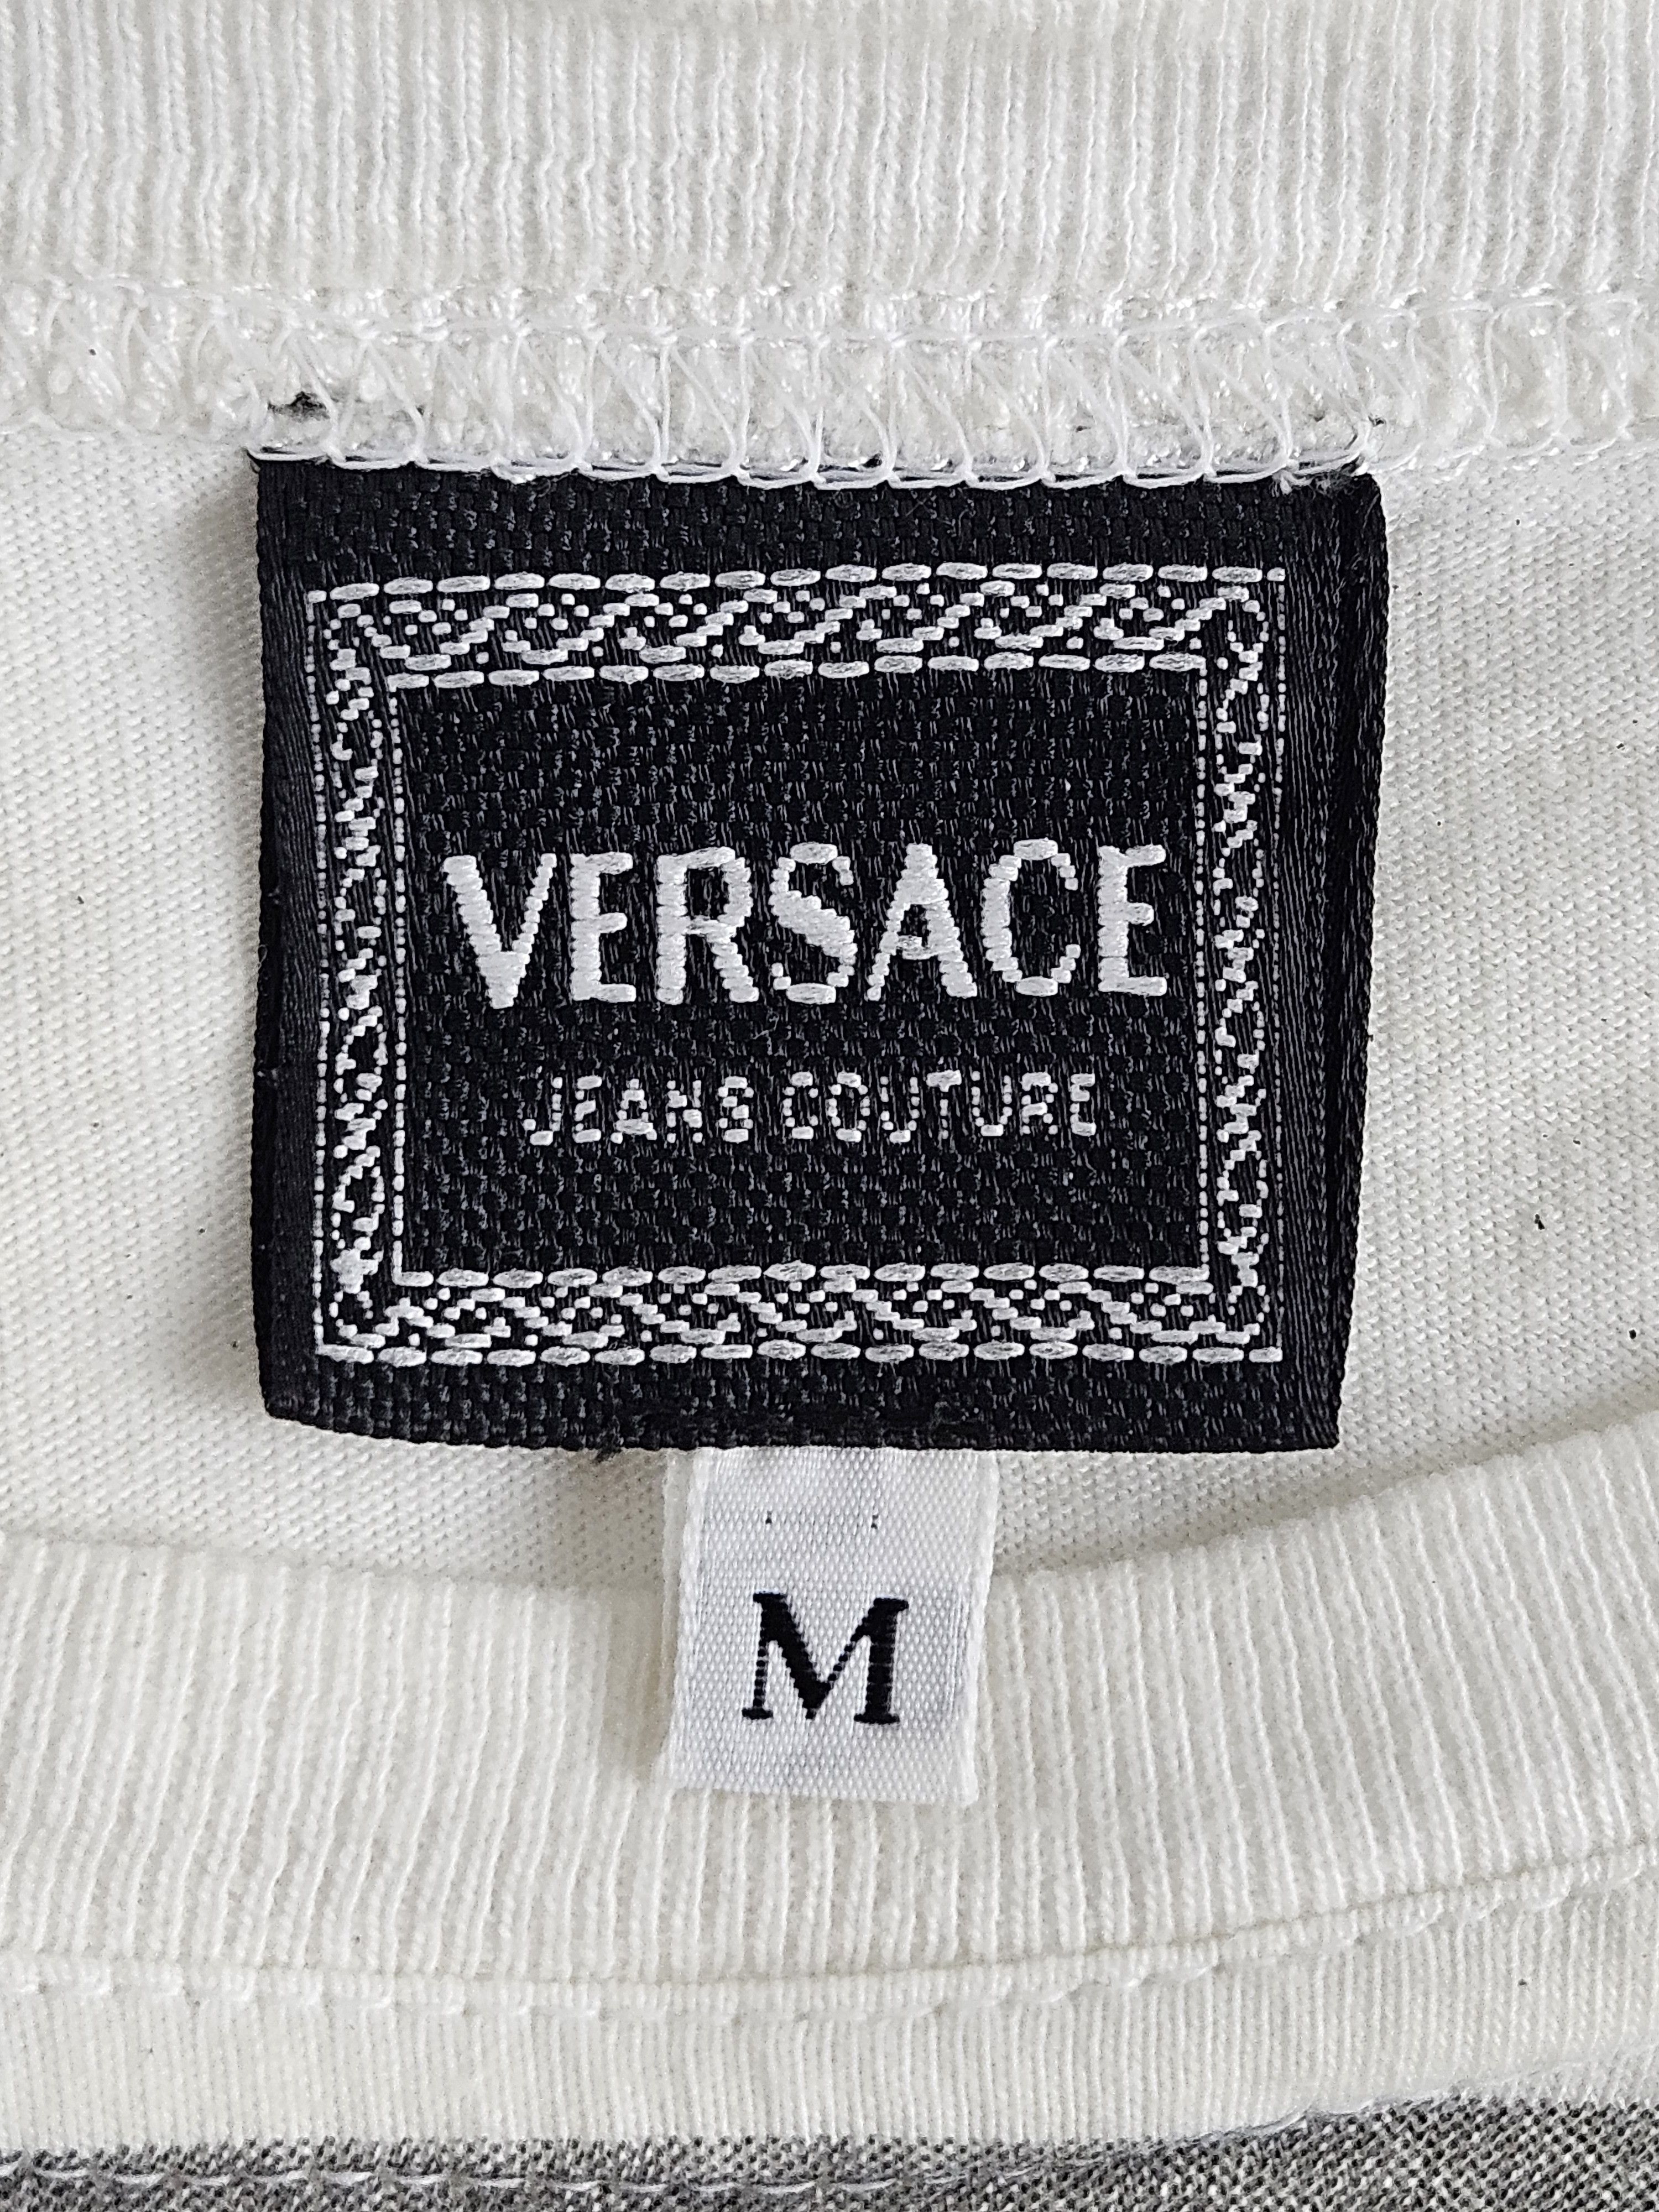 Versace Jeans Couture medusa pop art 90s italy shirt - 5